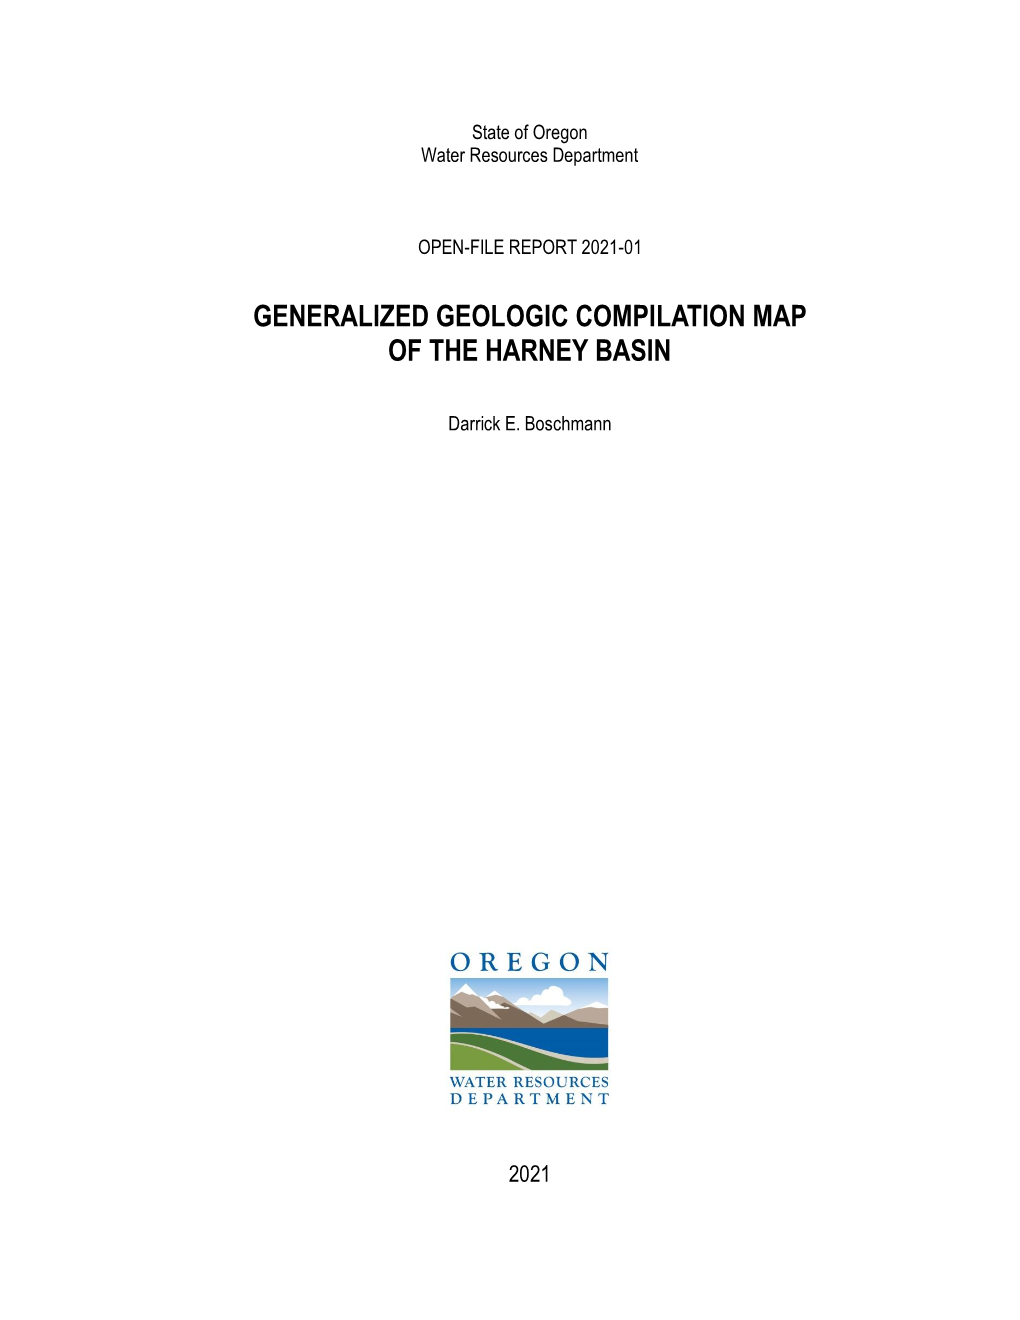 Open-File Report 2021-01: Harney Basin